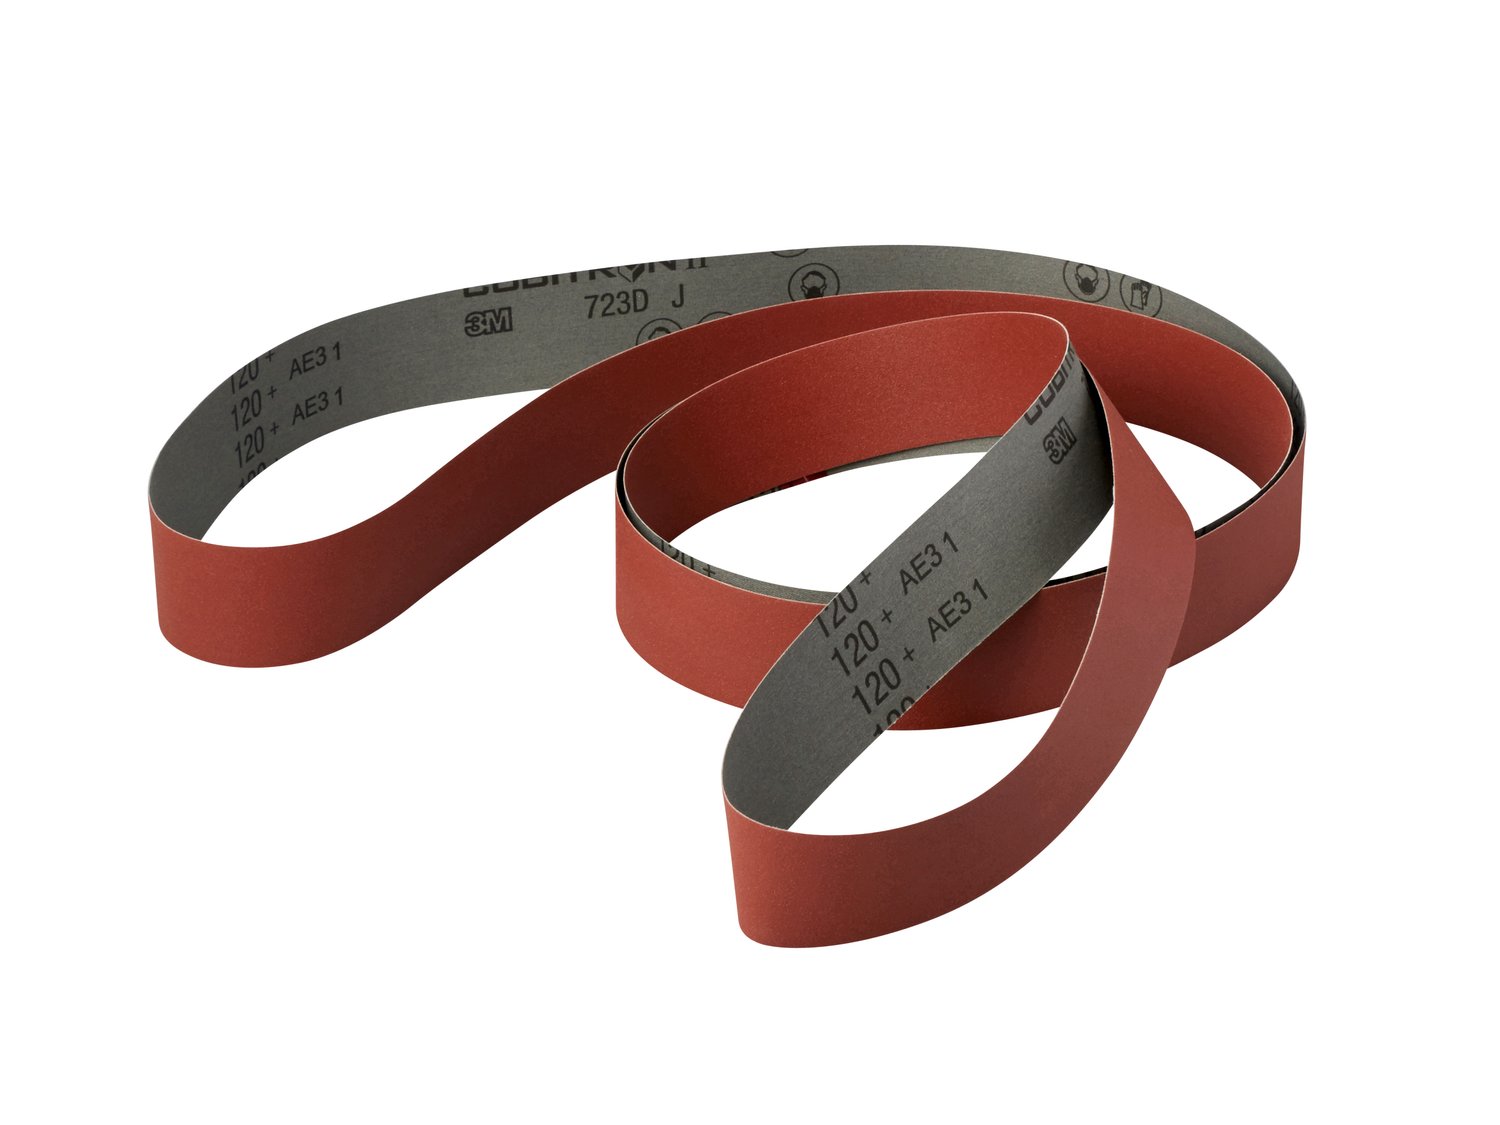 7100194940 - 3M Cubitron ll Cloth Belt 723D, 220+ J-weight, 3 in x 118-5/8 in,
Film-lok, Full-flex